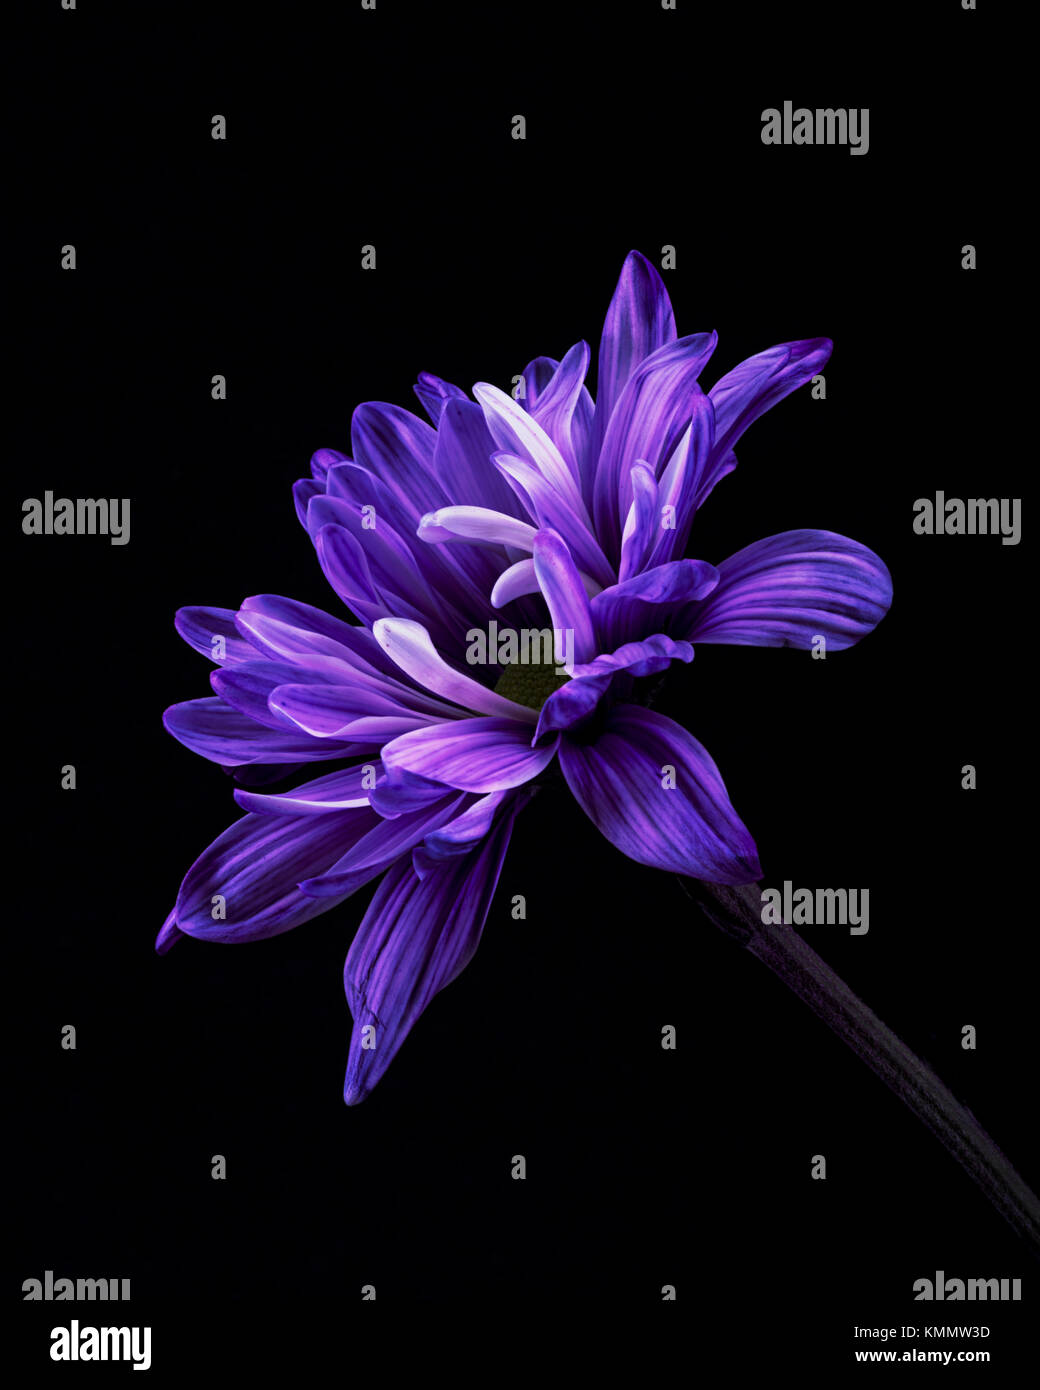 Single, Vivid, Bright Purple Flower on Plain Black Background Stock Photo -  Alamy